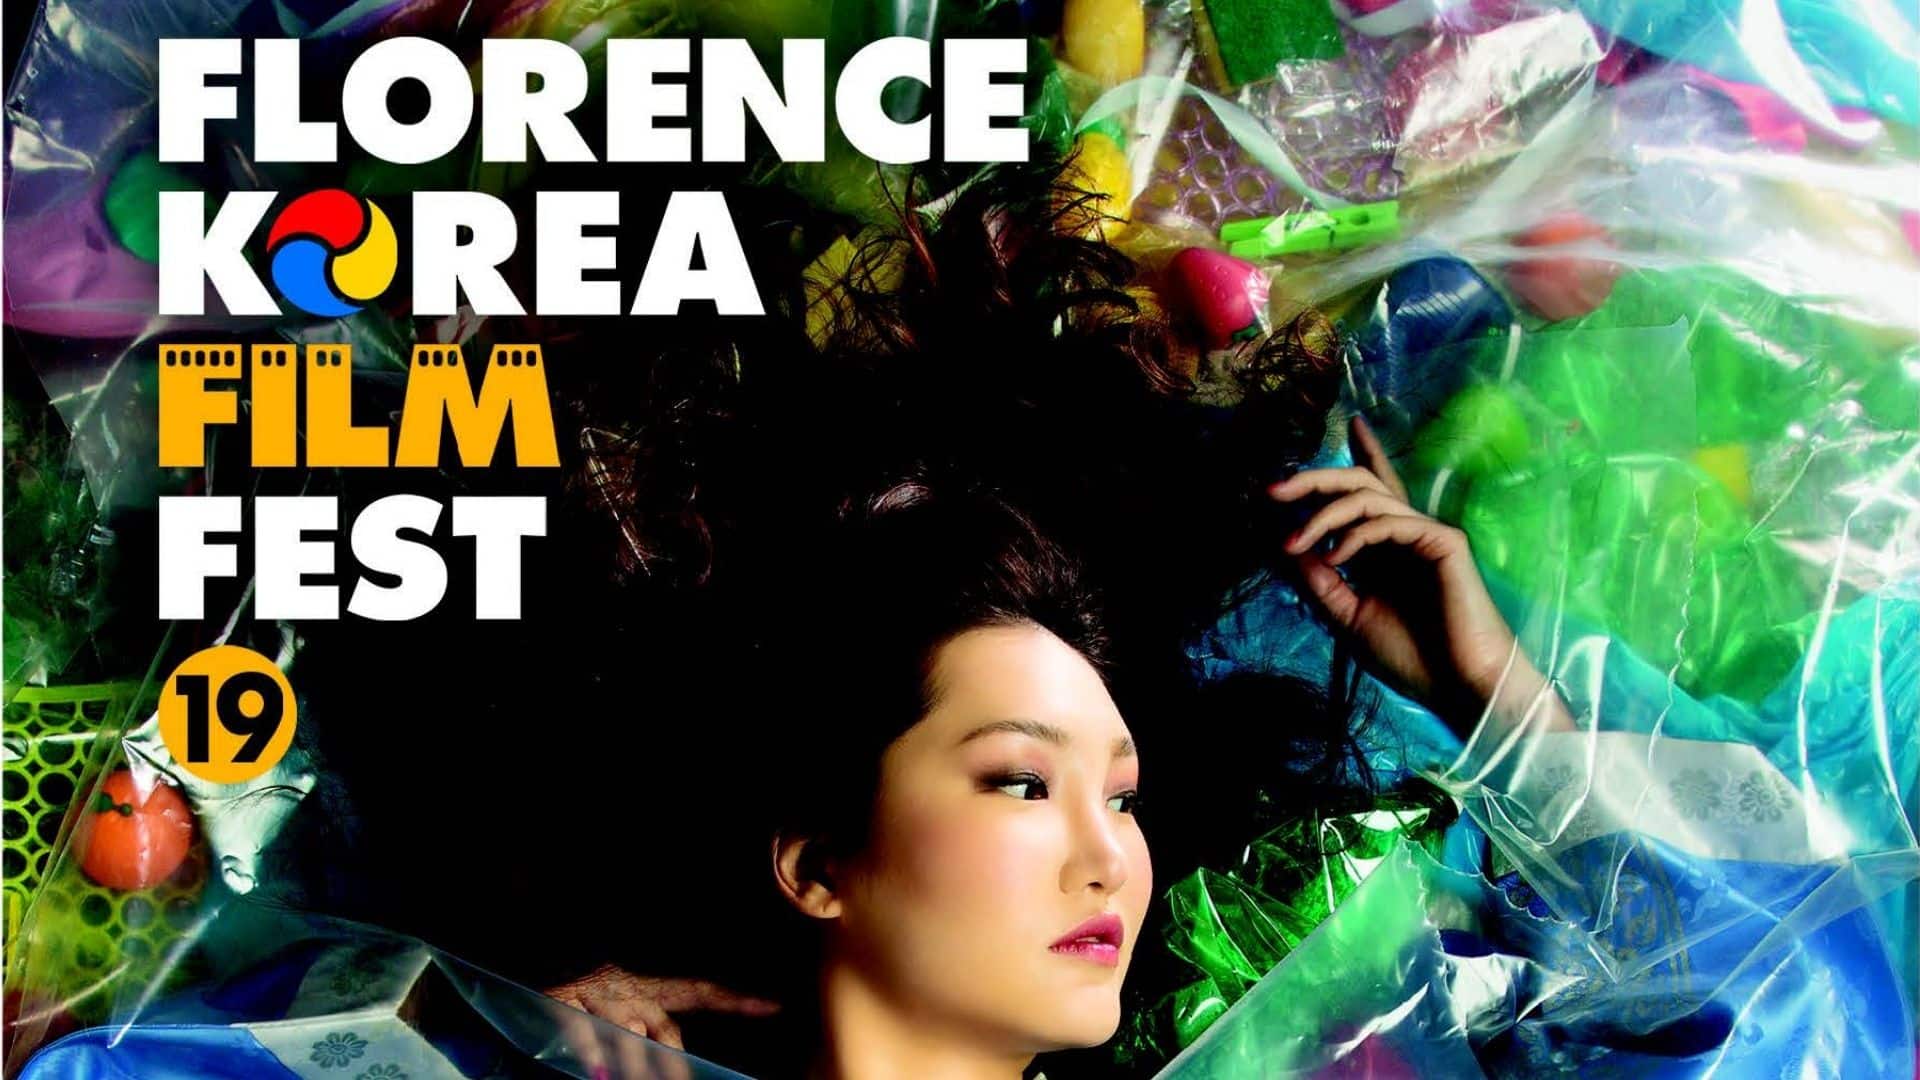 Florence Korea Film Fest - cinematographe.it